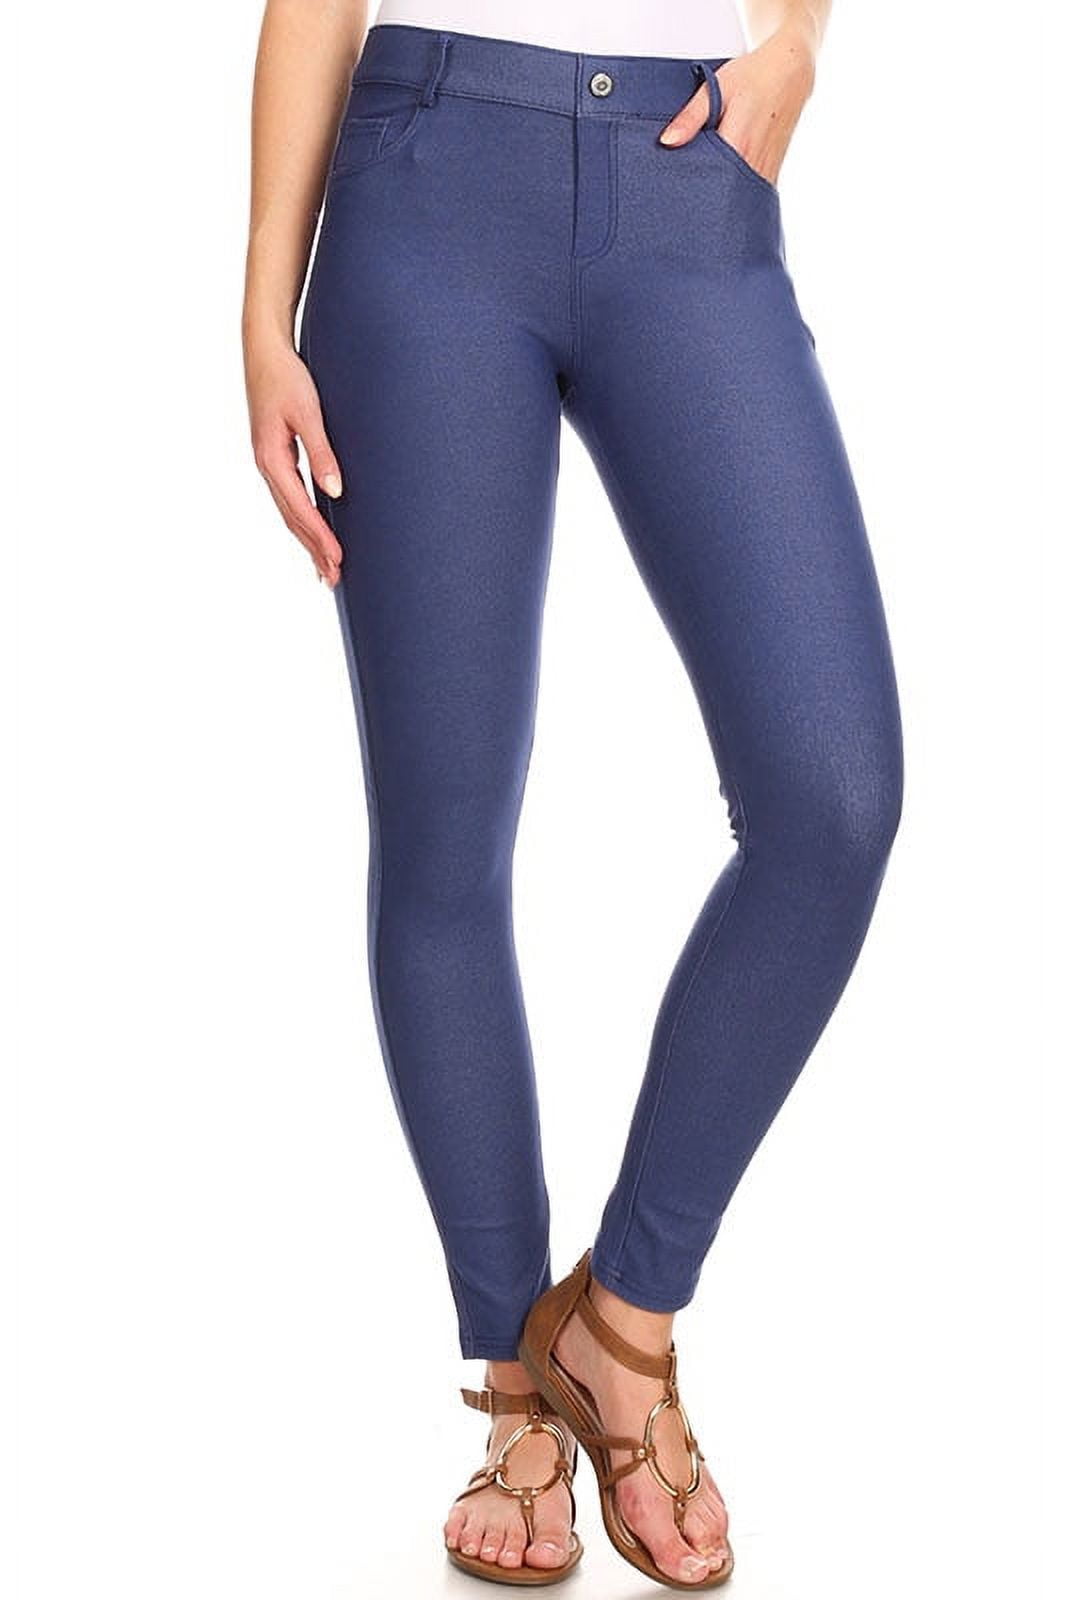 EttelLut Cotton Spandex Full Leggings Pants Activewear for Women